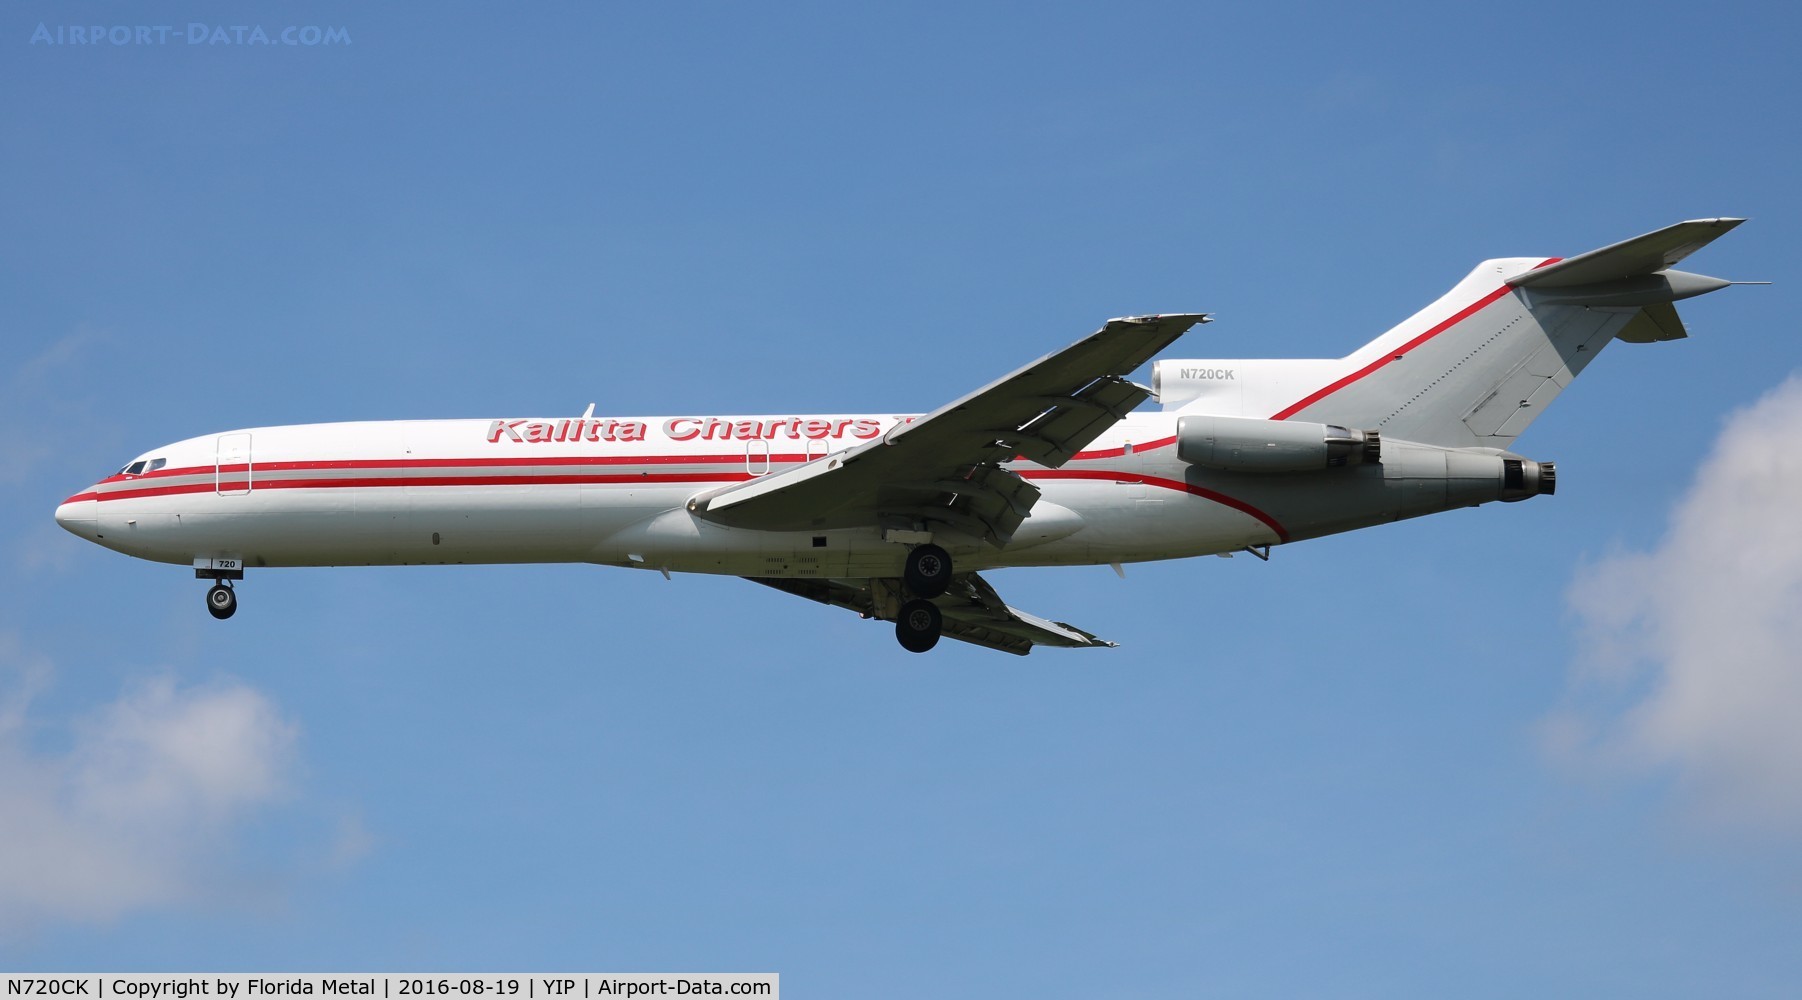 N720CK, 1977 Boeing 727-2B6 C/N 21298, Kalitta Charters